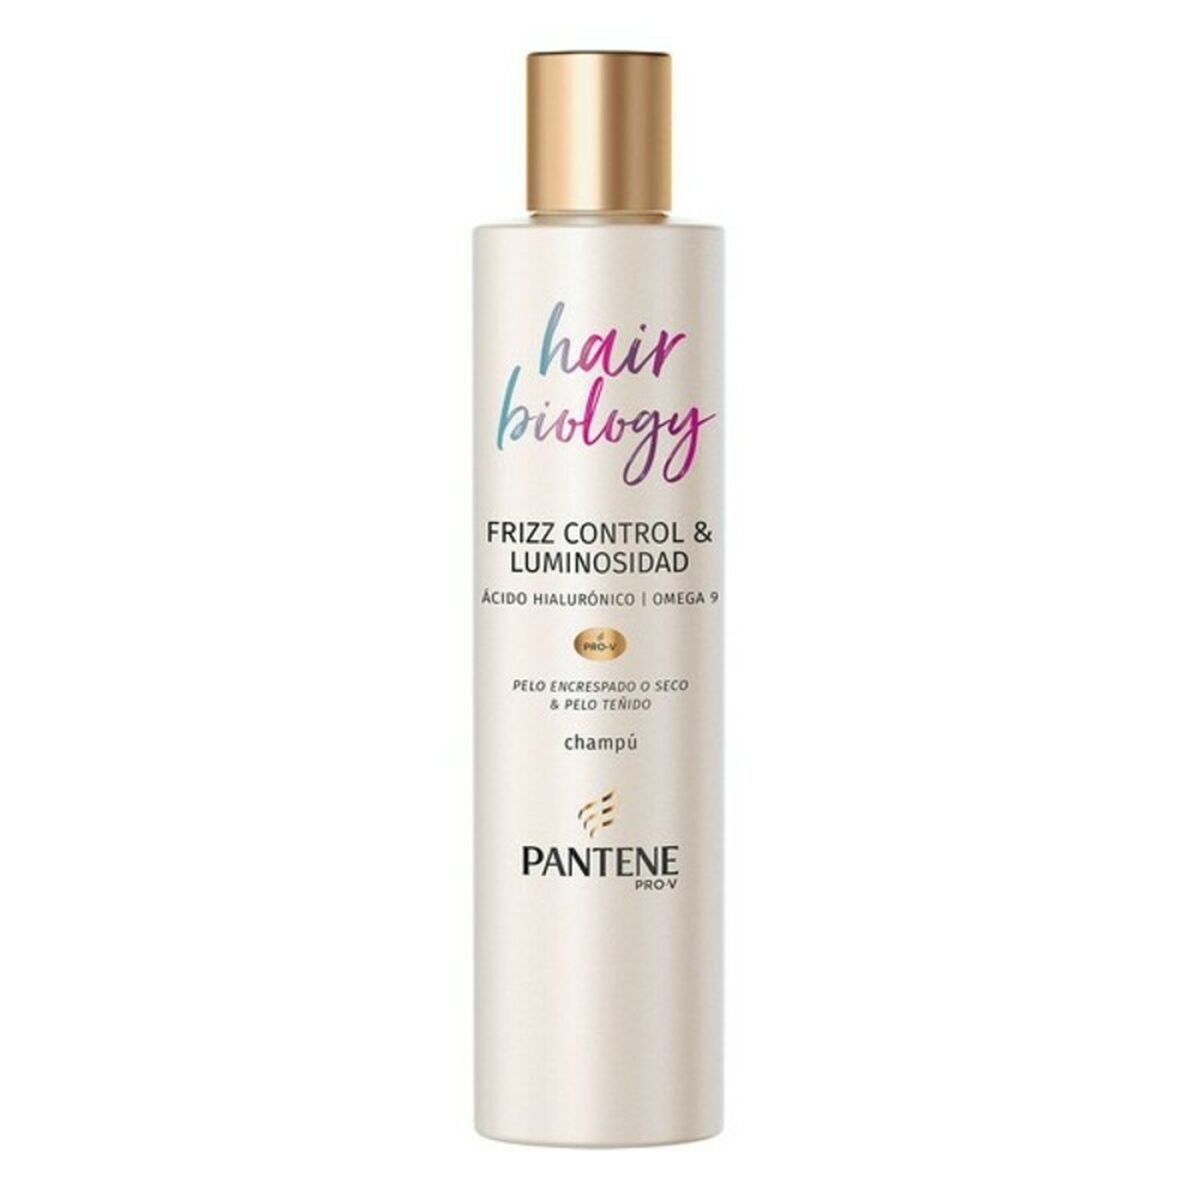 Biologie des cheveux de shampooing Frizz & Luminosidad Pantene (250 ml)